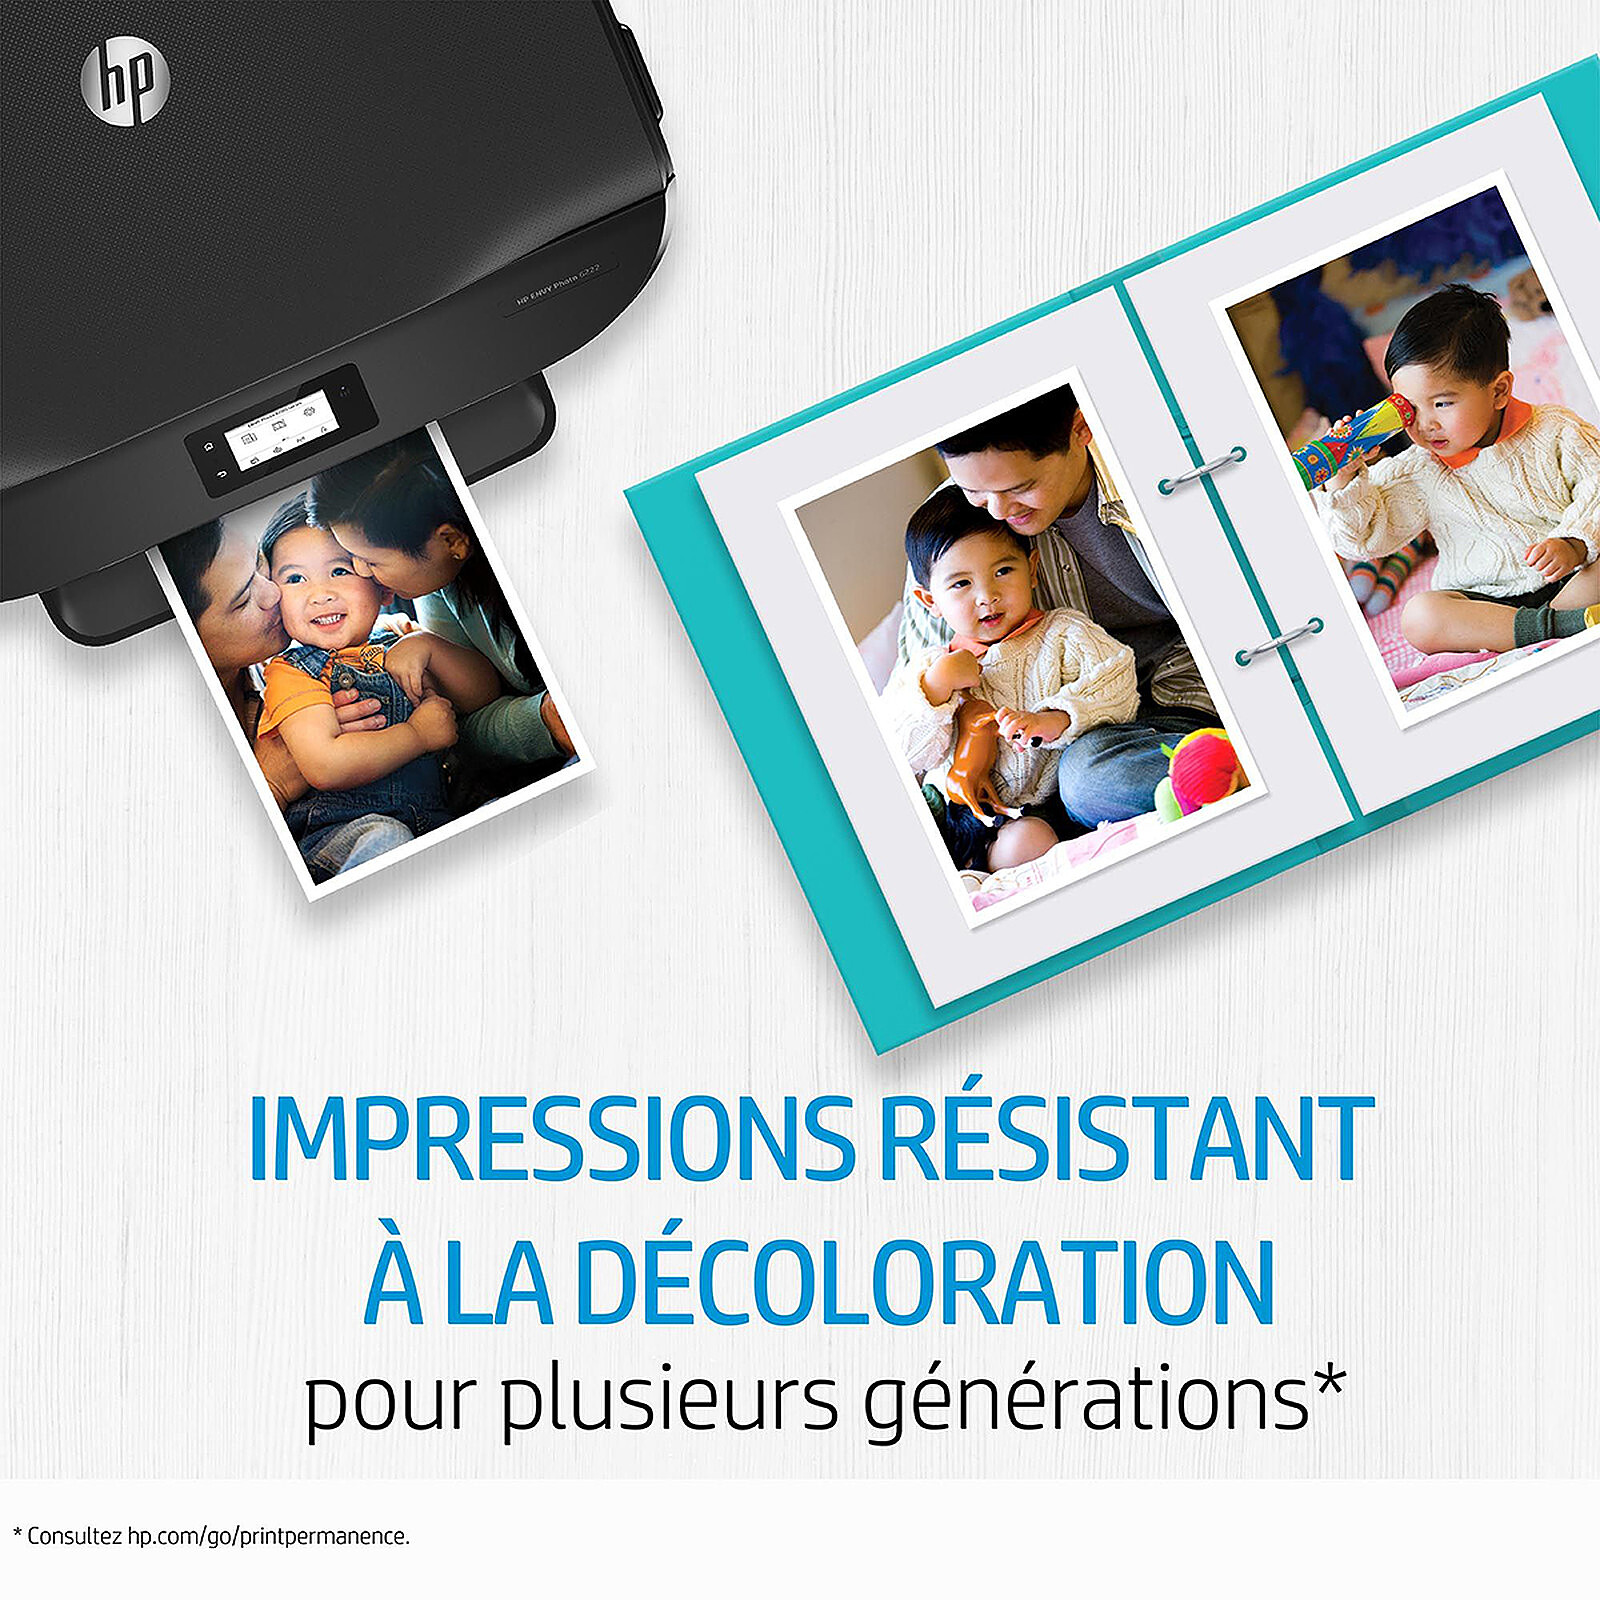 HP 903 Pack de 4 Cartouches d'Encre - Noir/Cyan/Magenta/Jaune